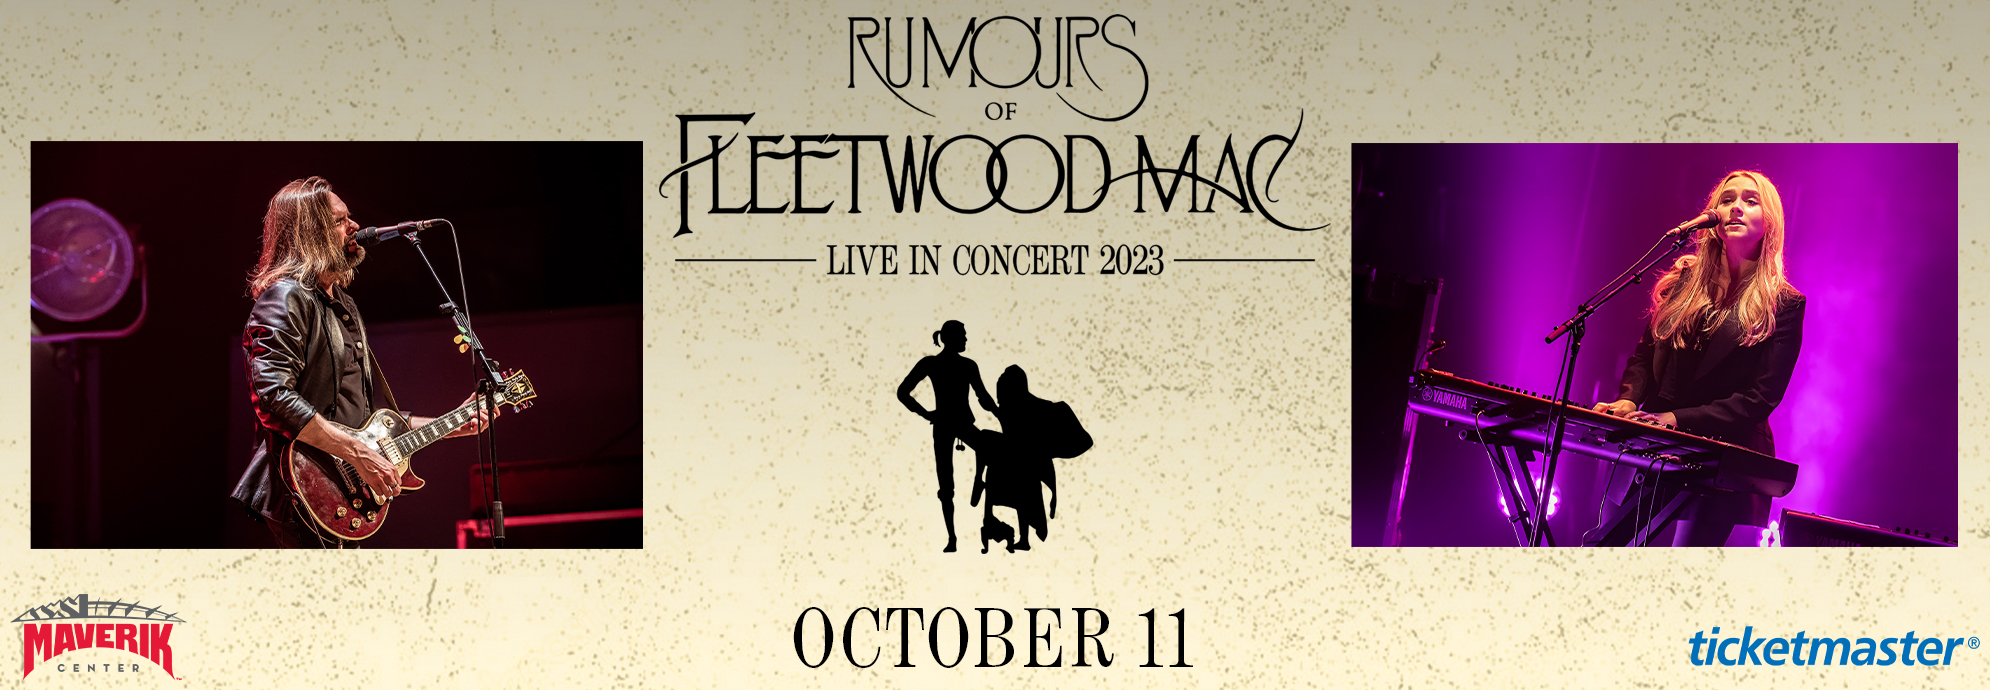 Rumors of Fleetwood Mac